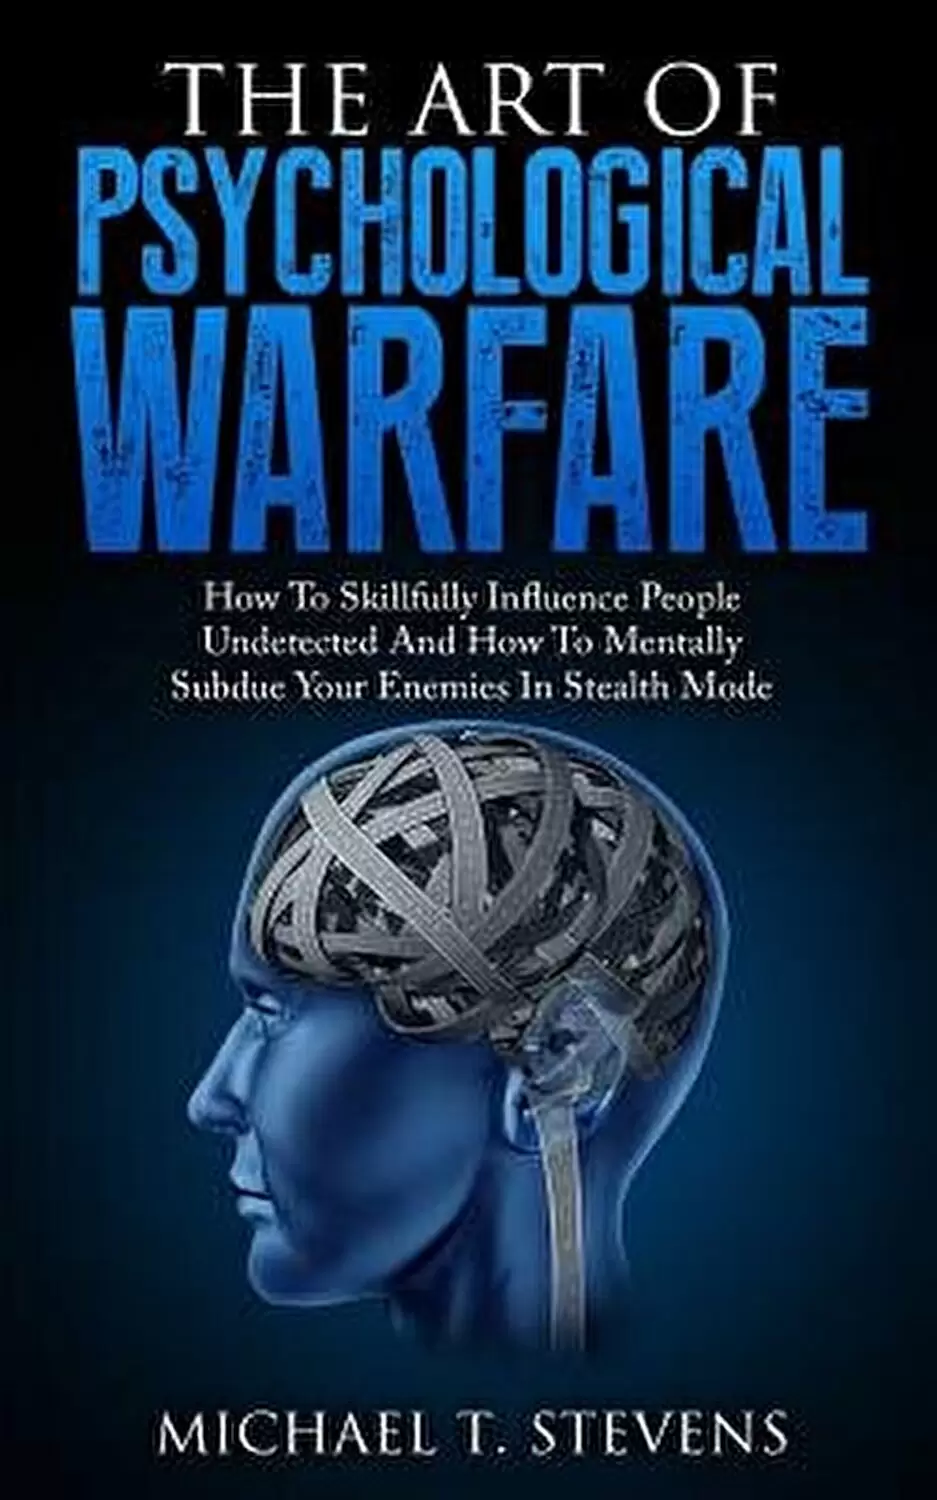 Podcast Michael P Stevens - The Art of Psychological Warfare